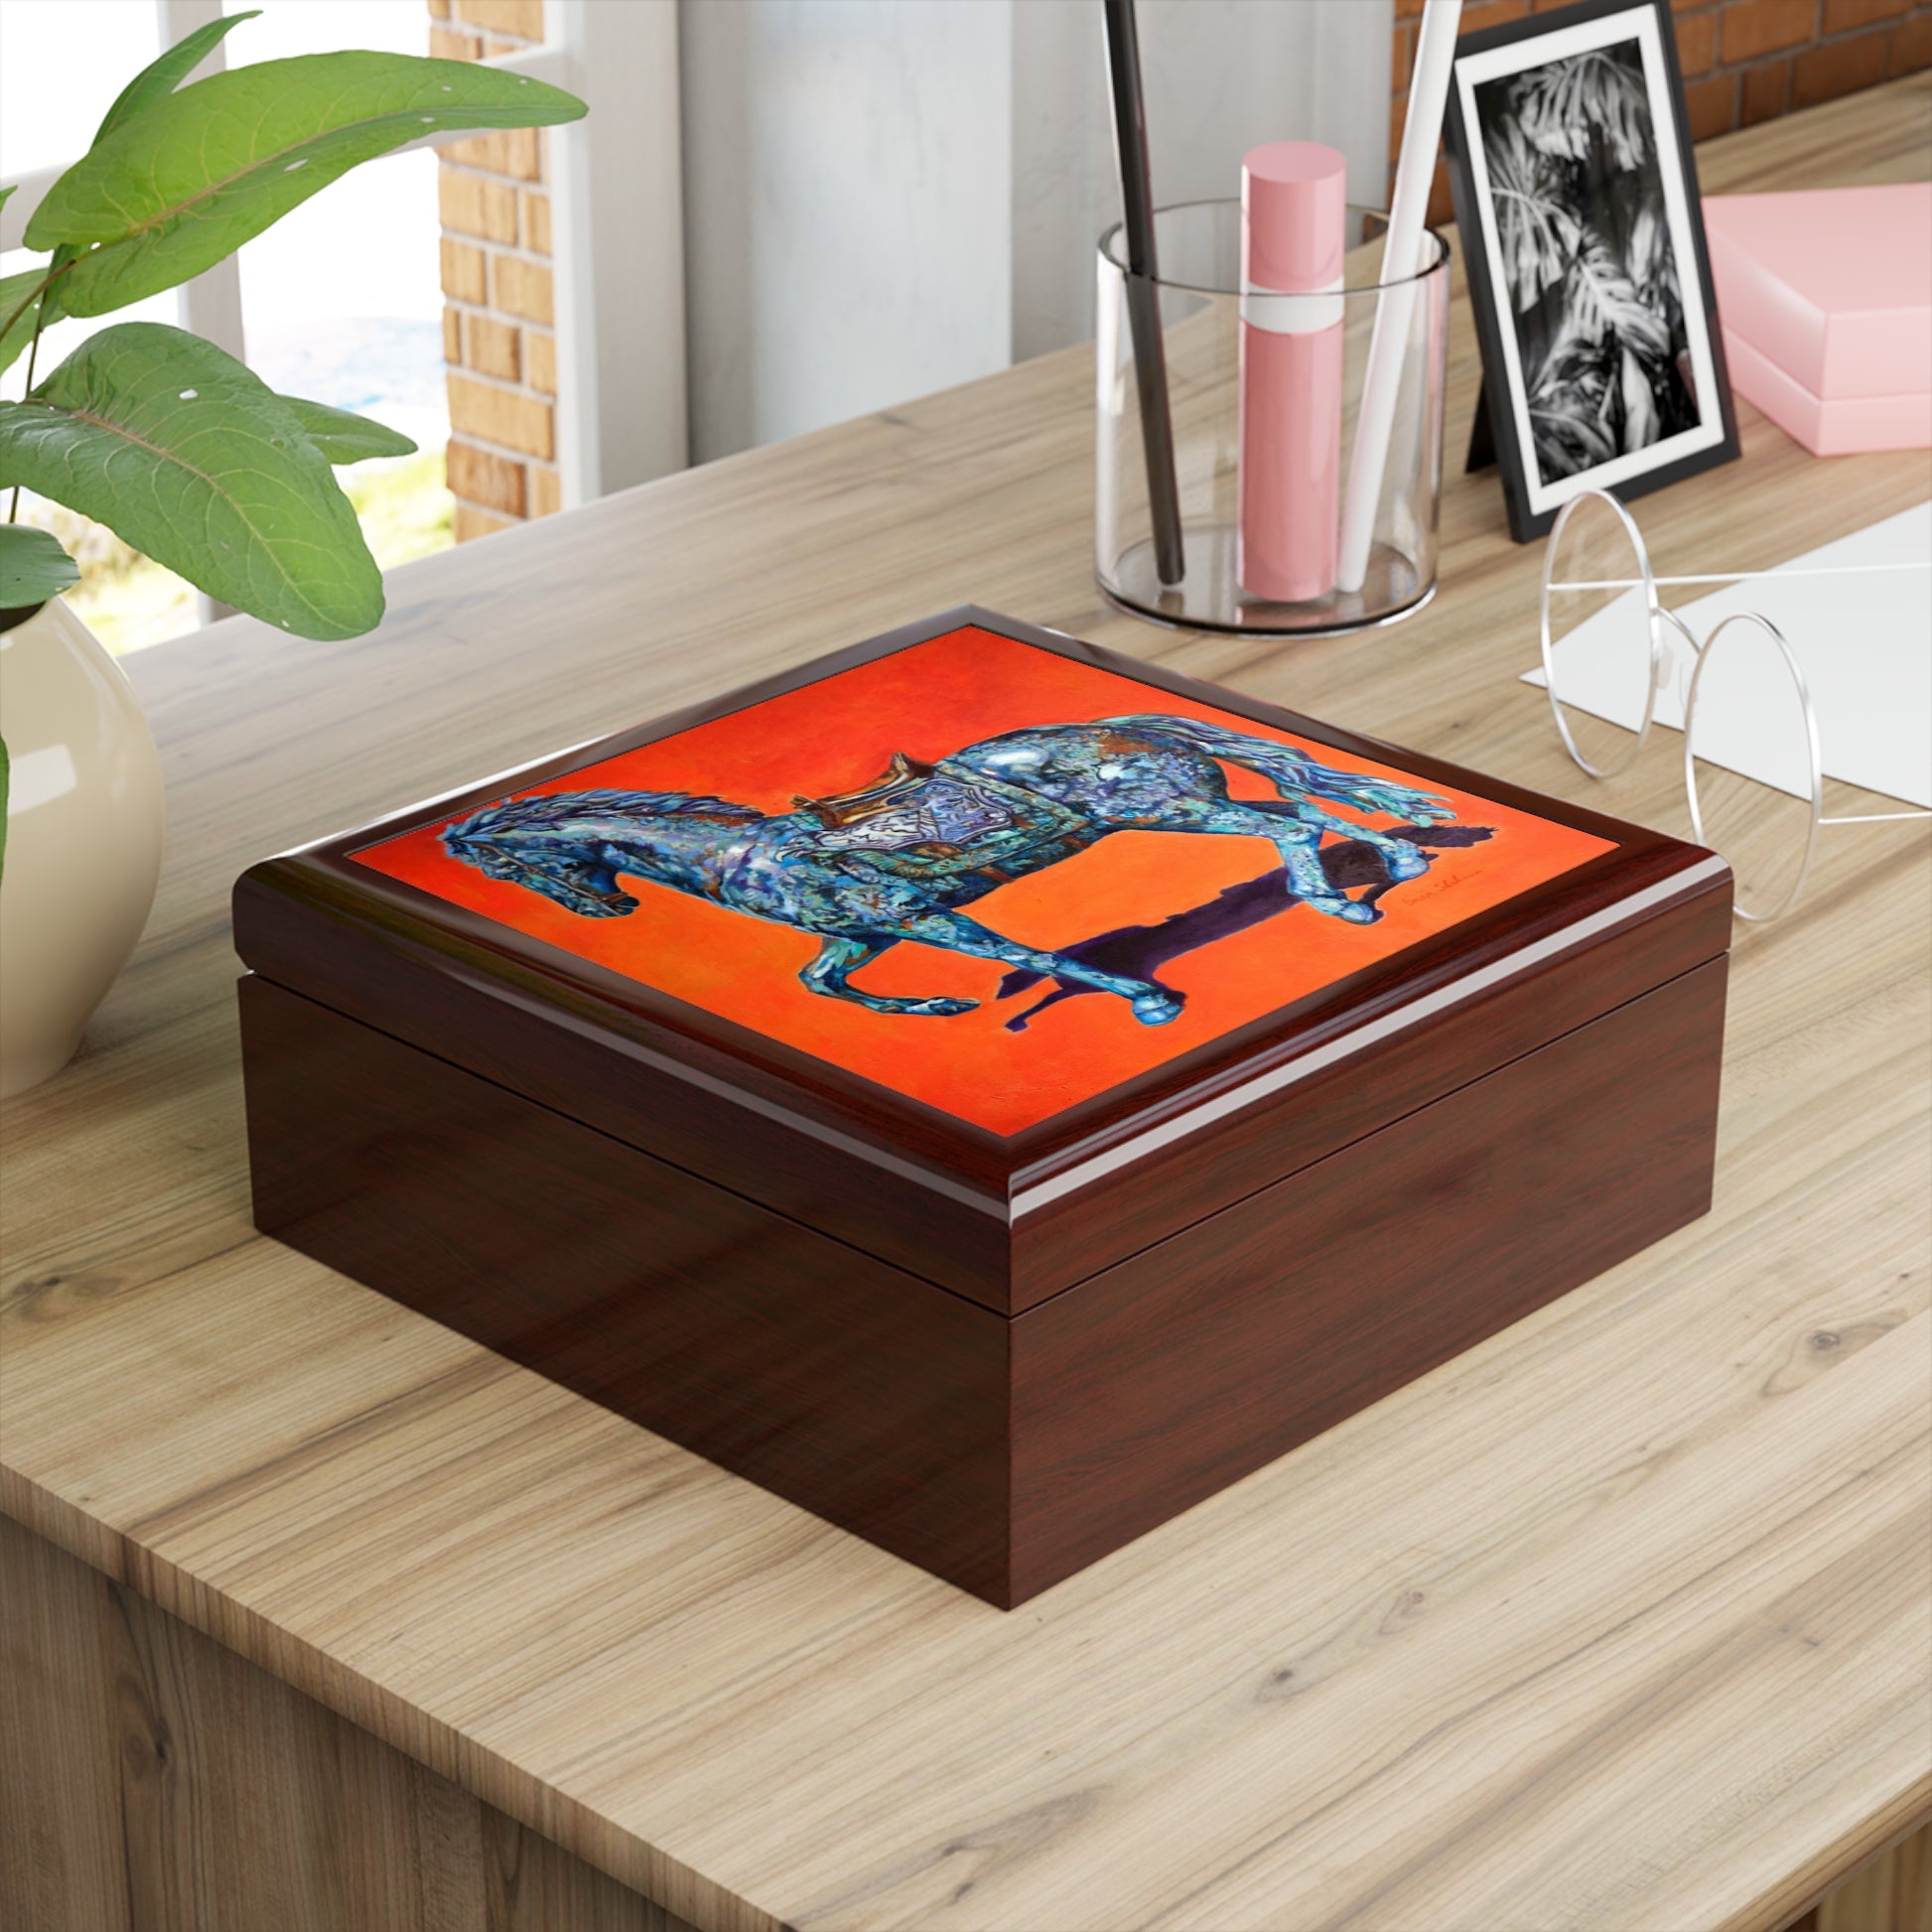 Keepsake/Jewelry Box - Indigo Horse - Wood Lacquer Box mahogany